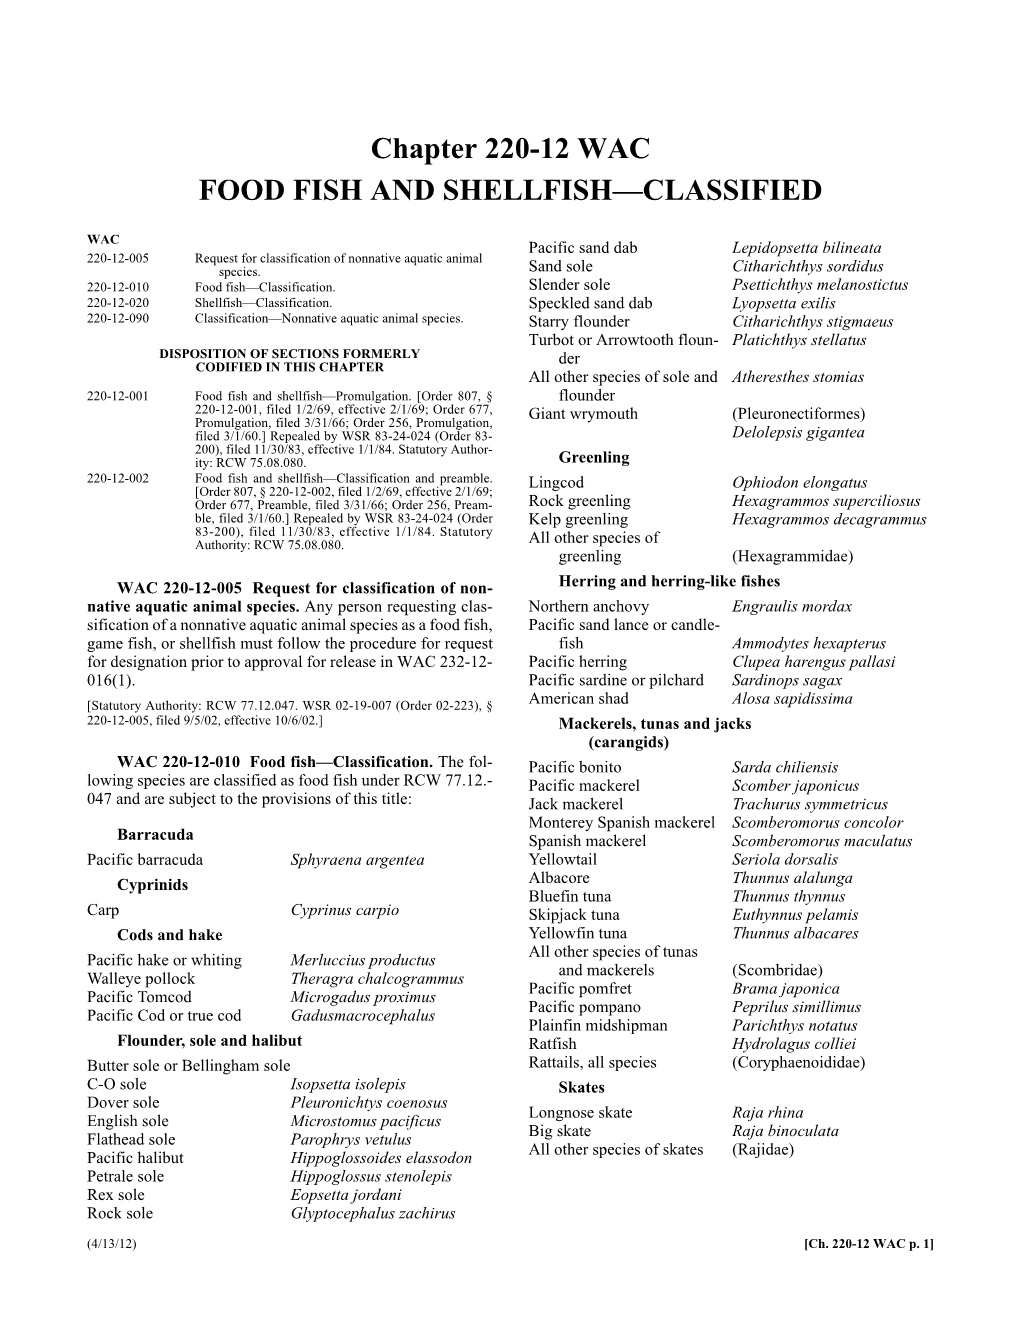 Wac Food Fish and Shellfish—Classified